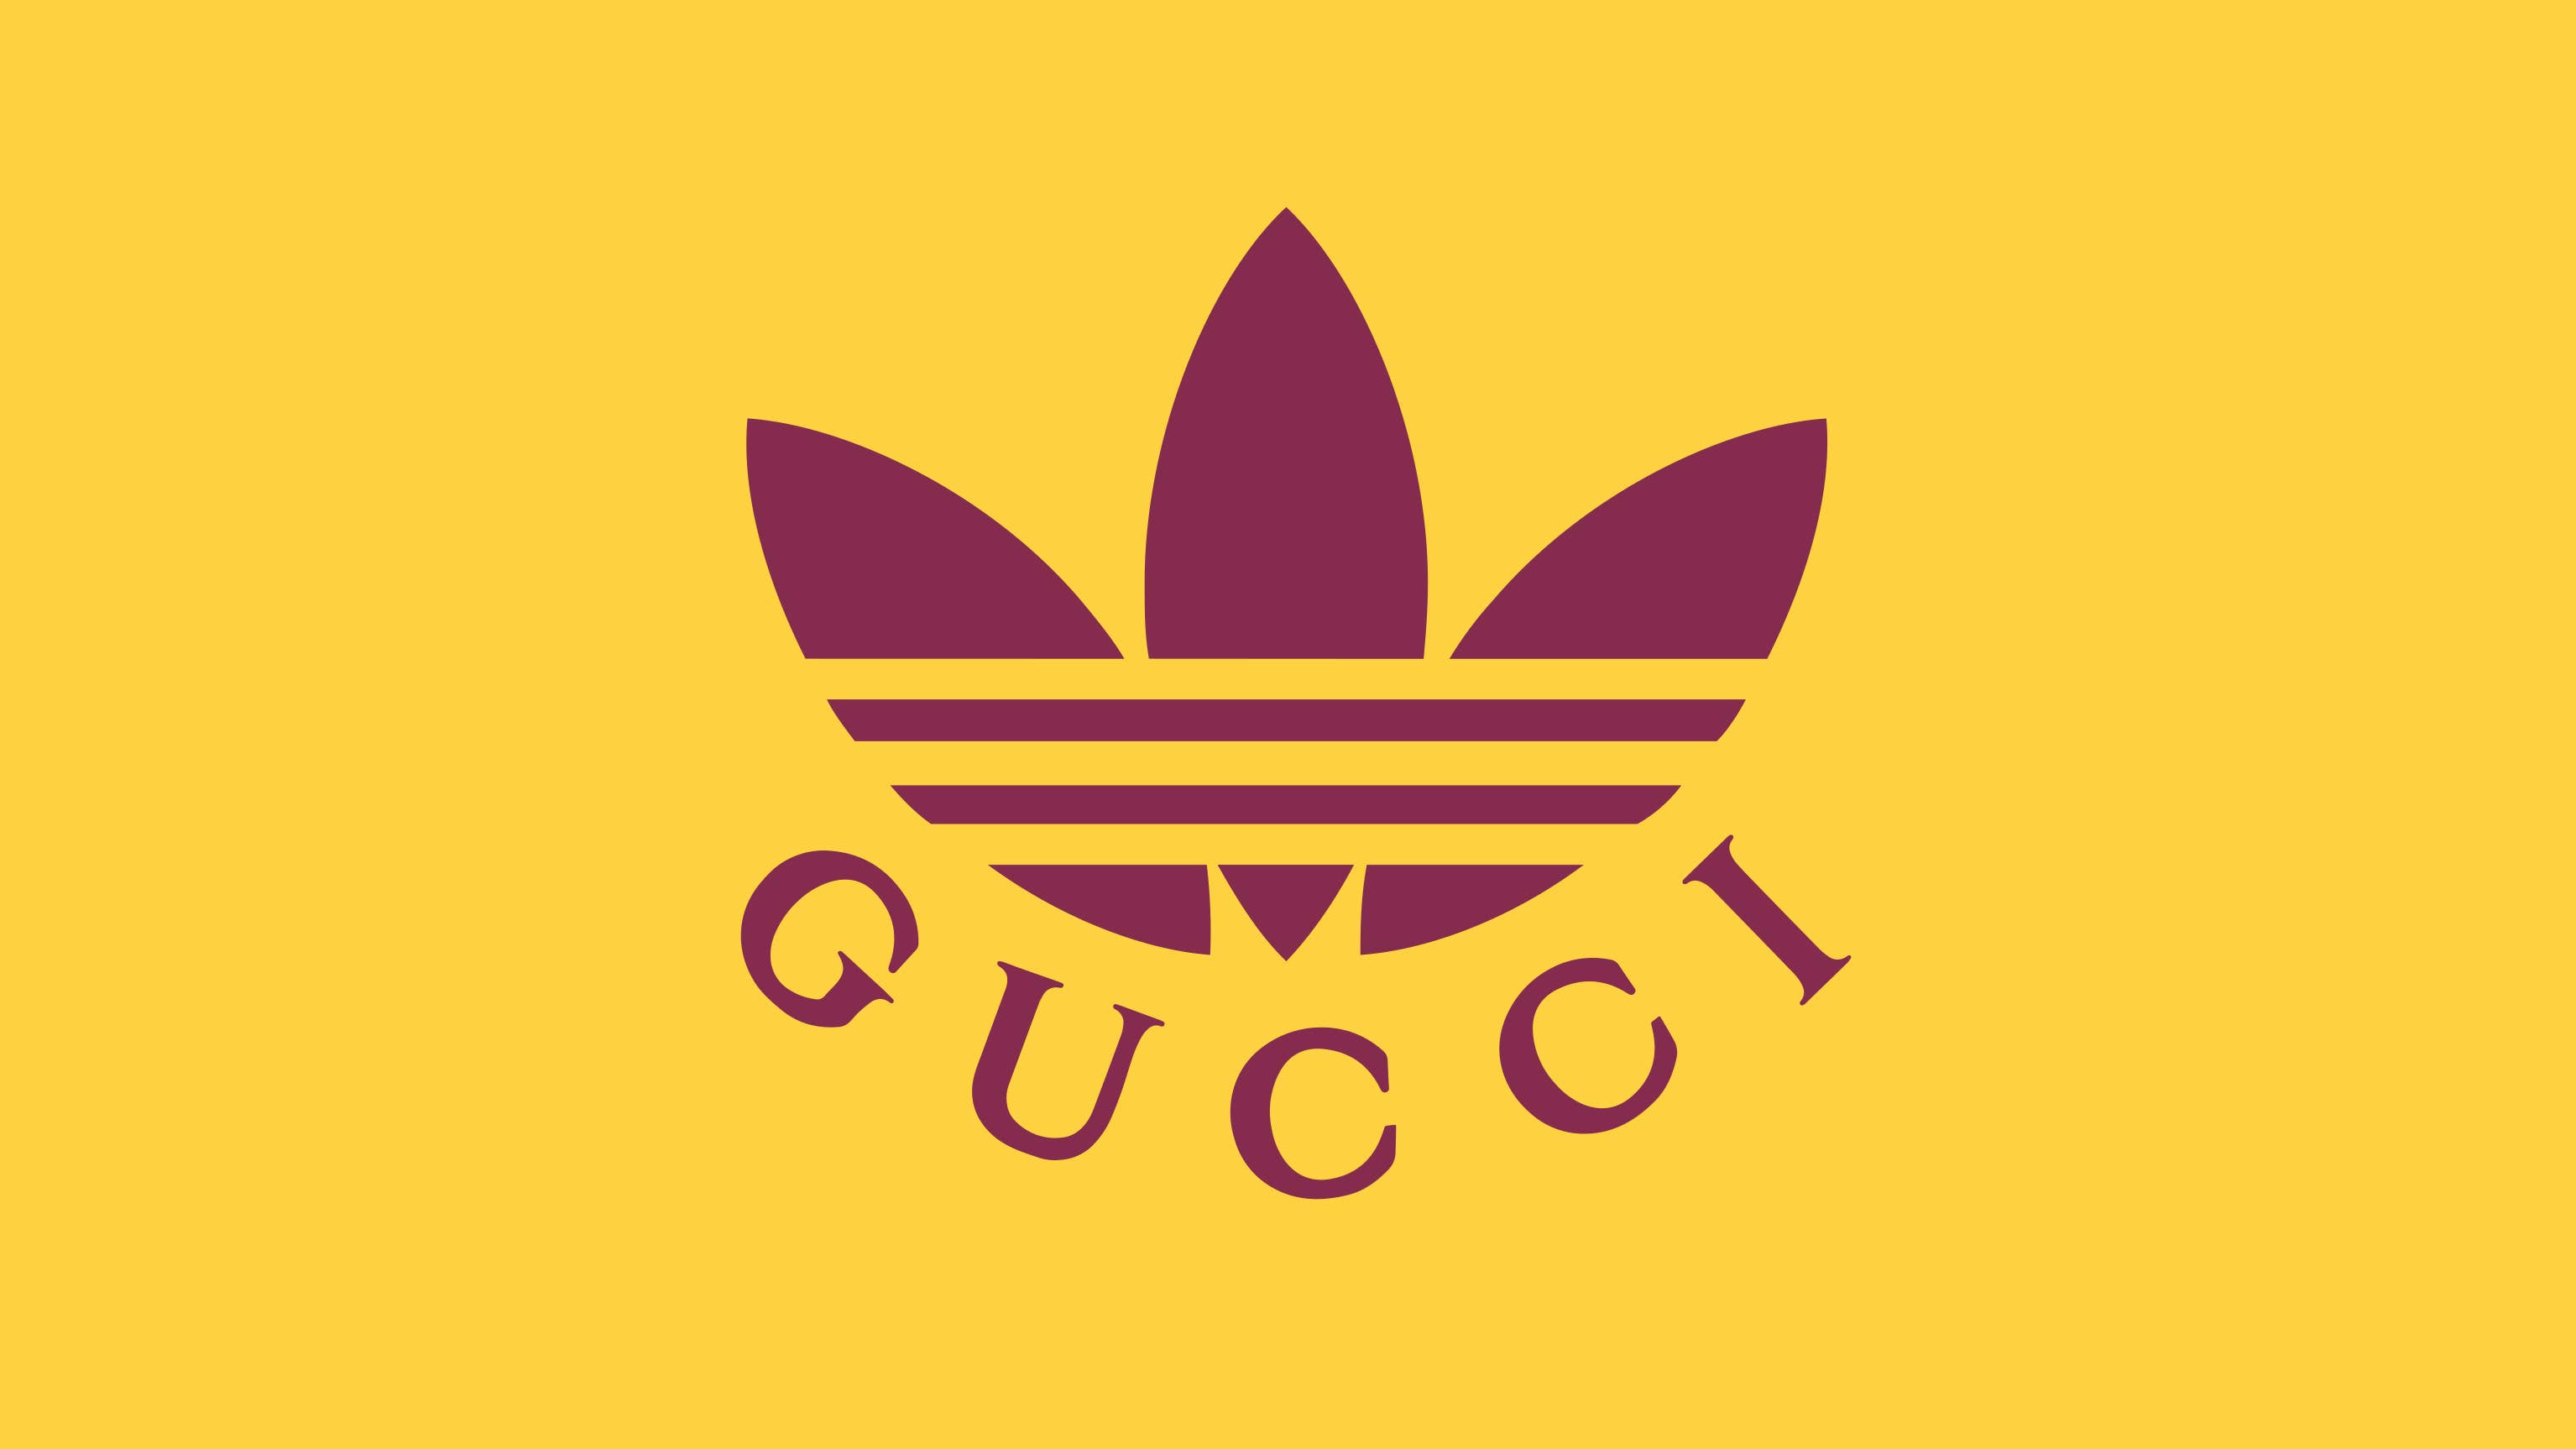 Gucci x Adidas Co-Branded Logo